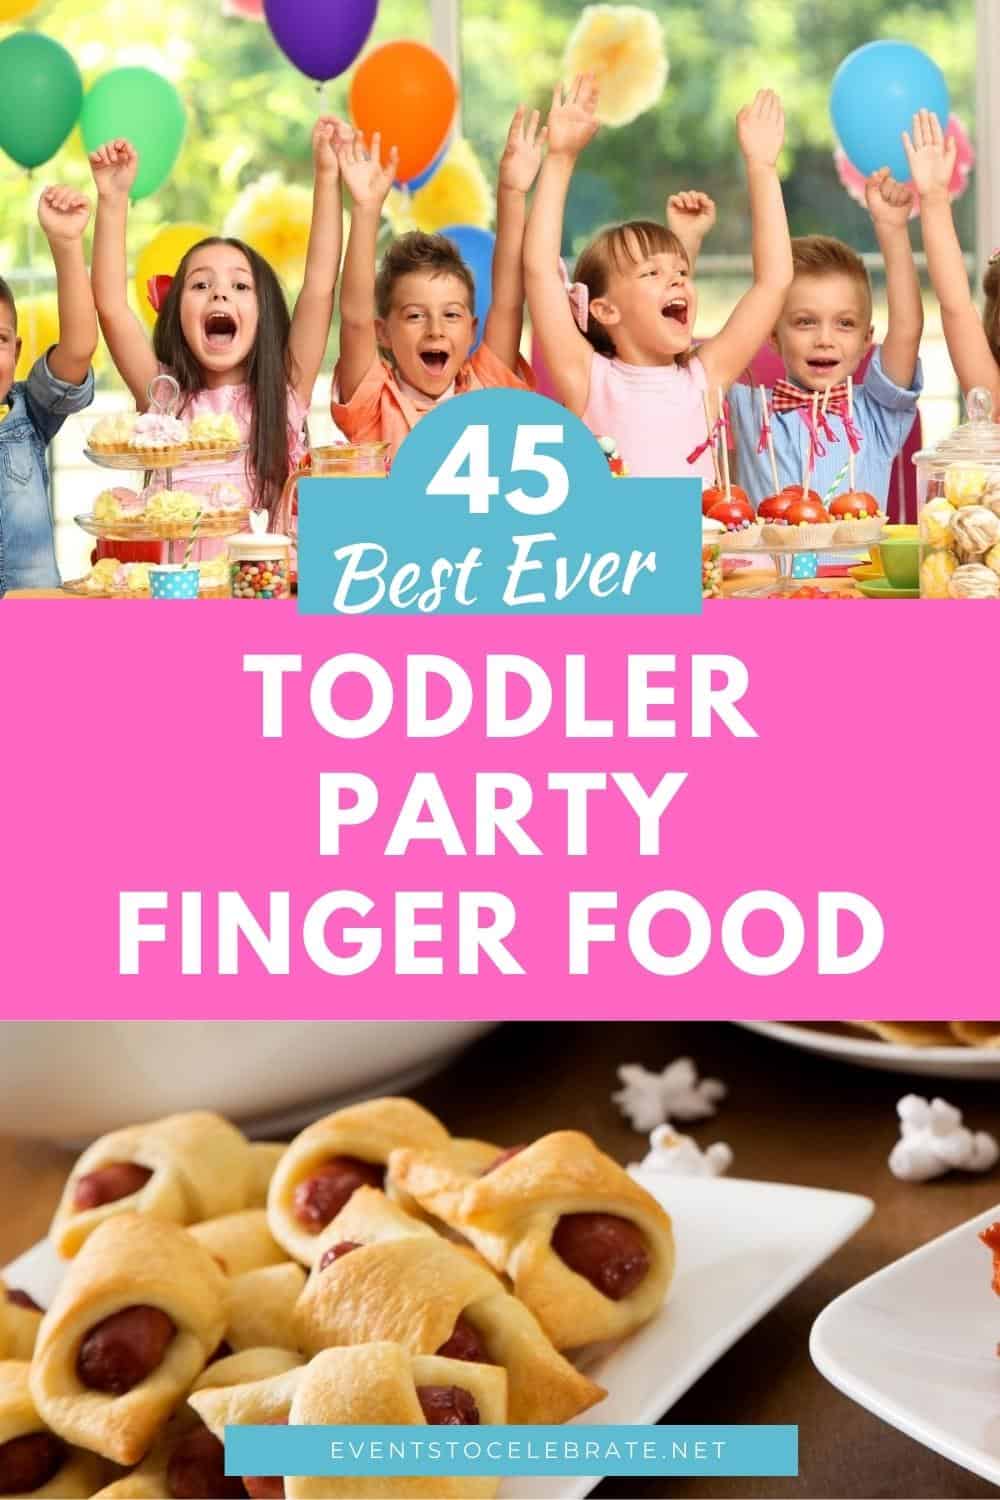 Toddler party finger food